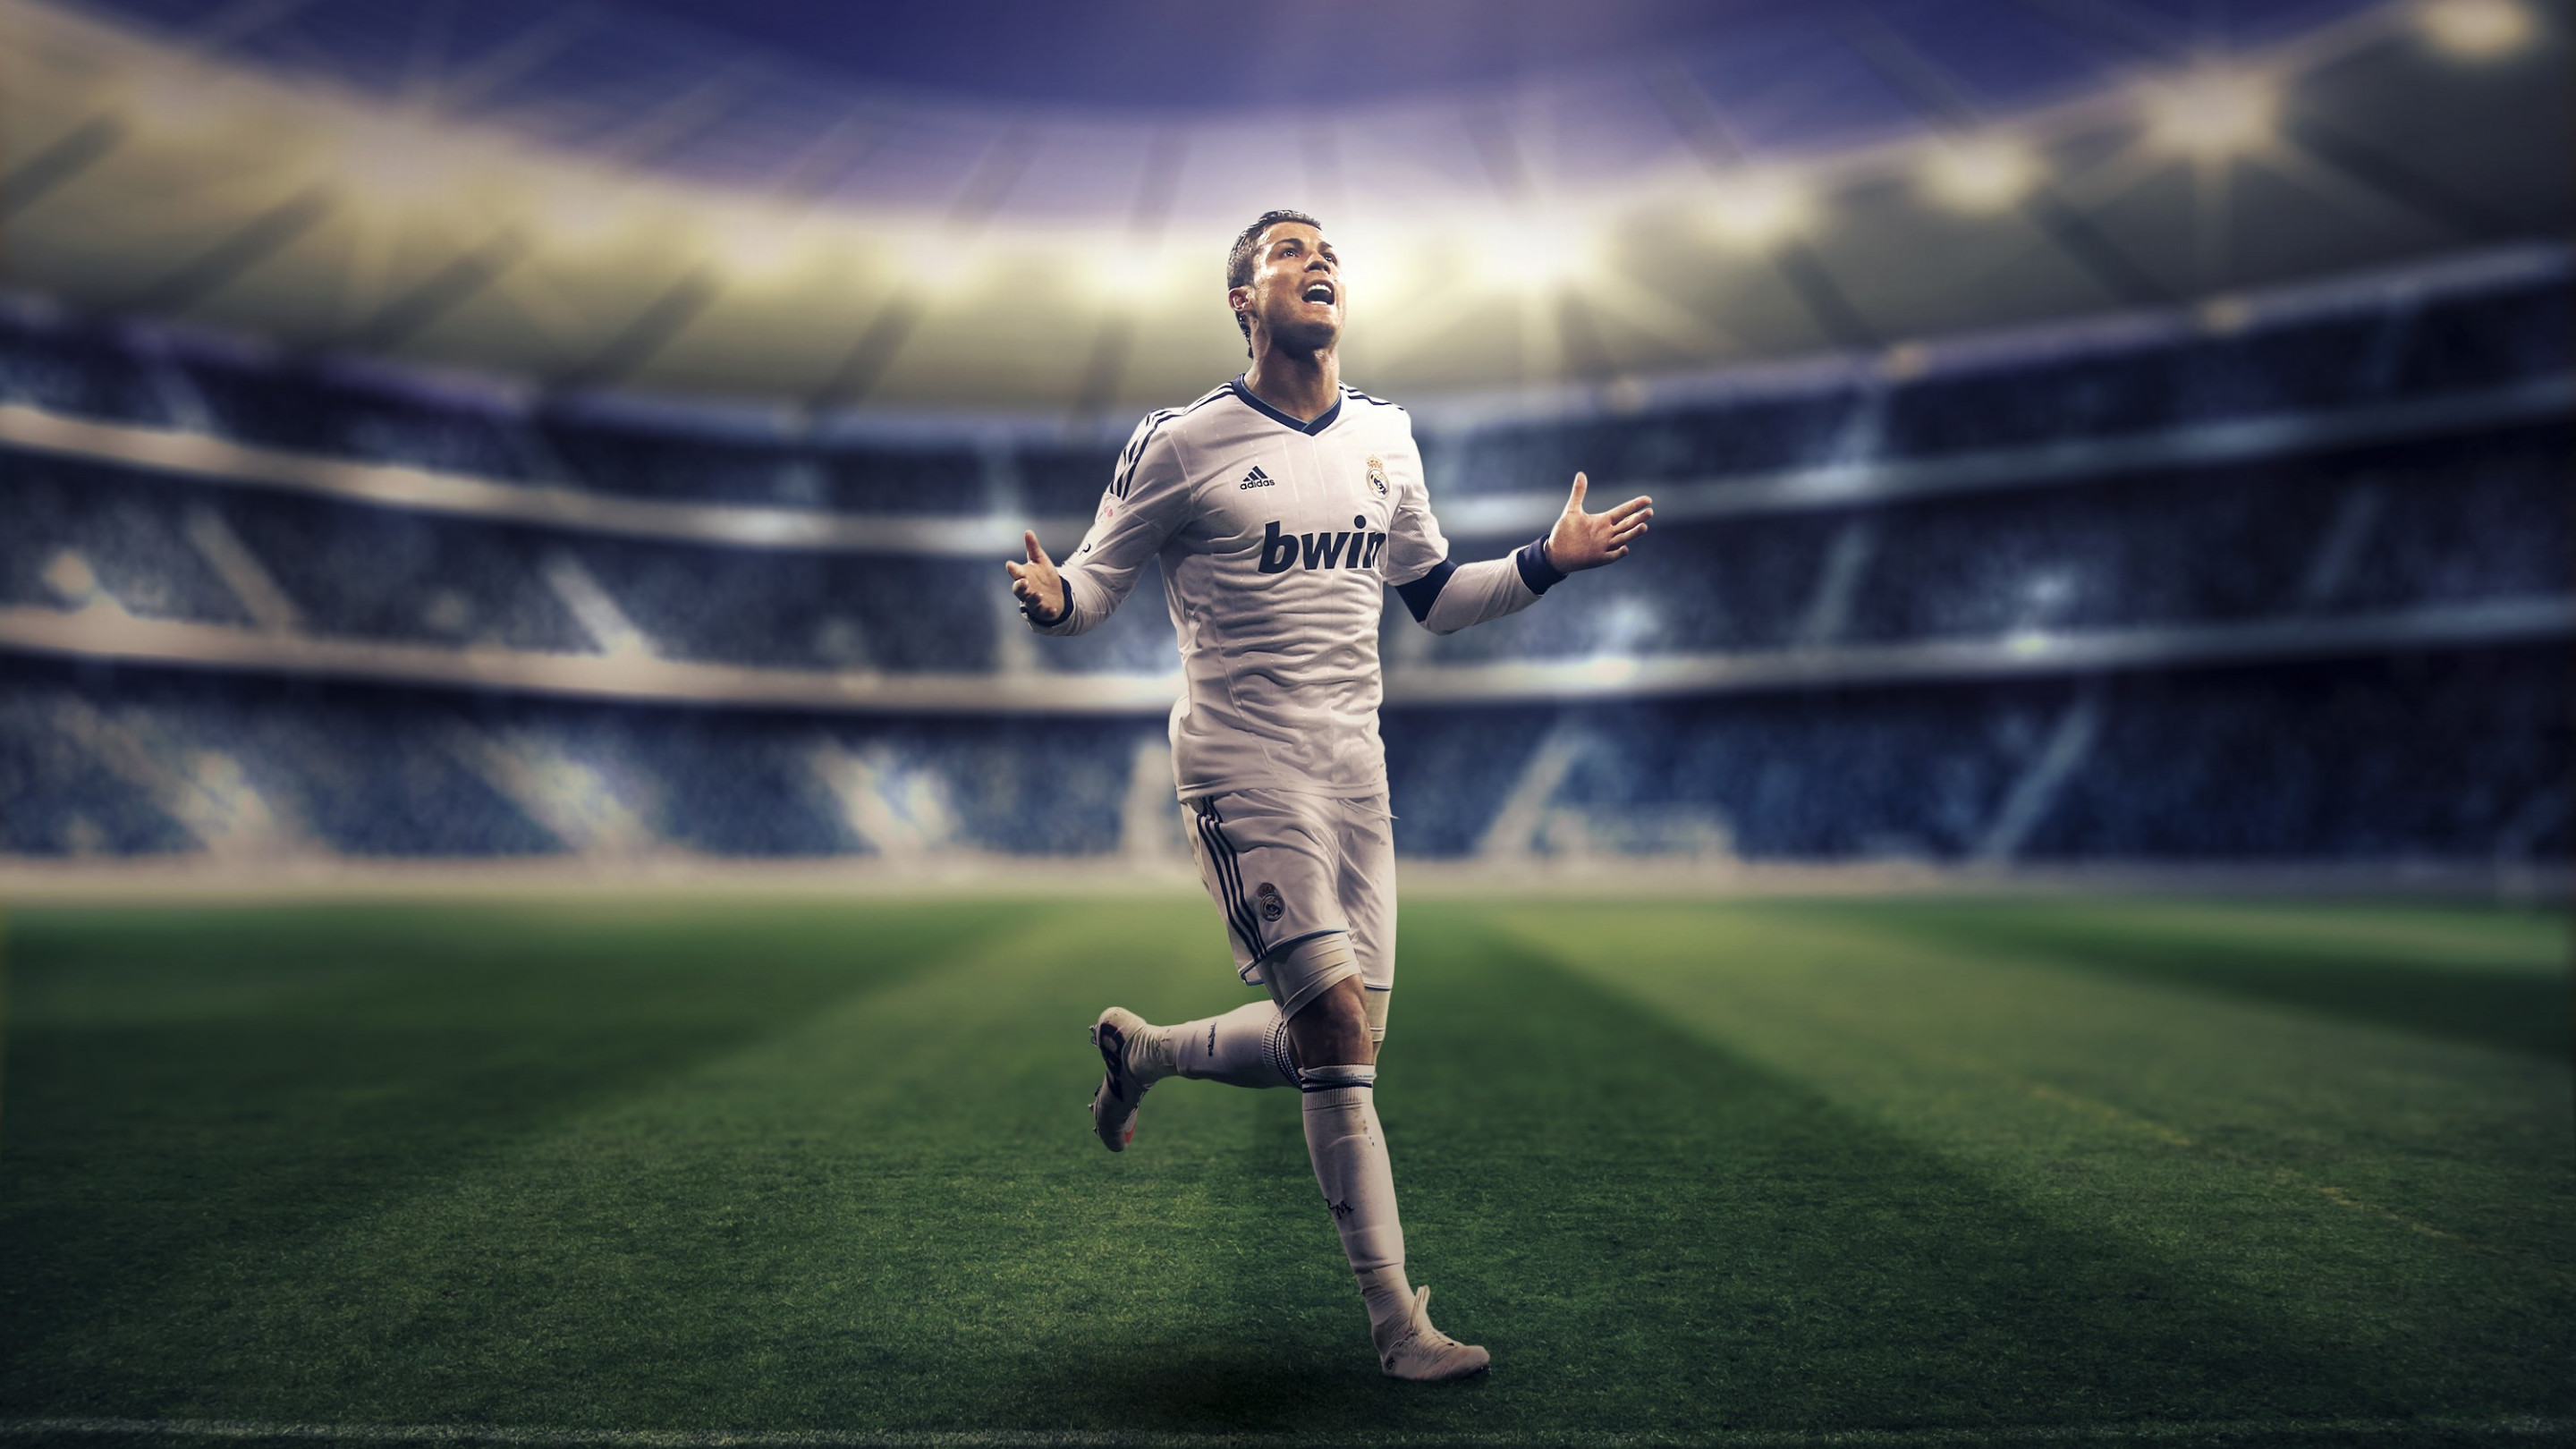 Cristiano Ronaldo for Real Madrid wallpaper 2880x1620